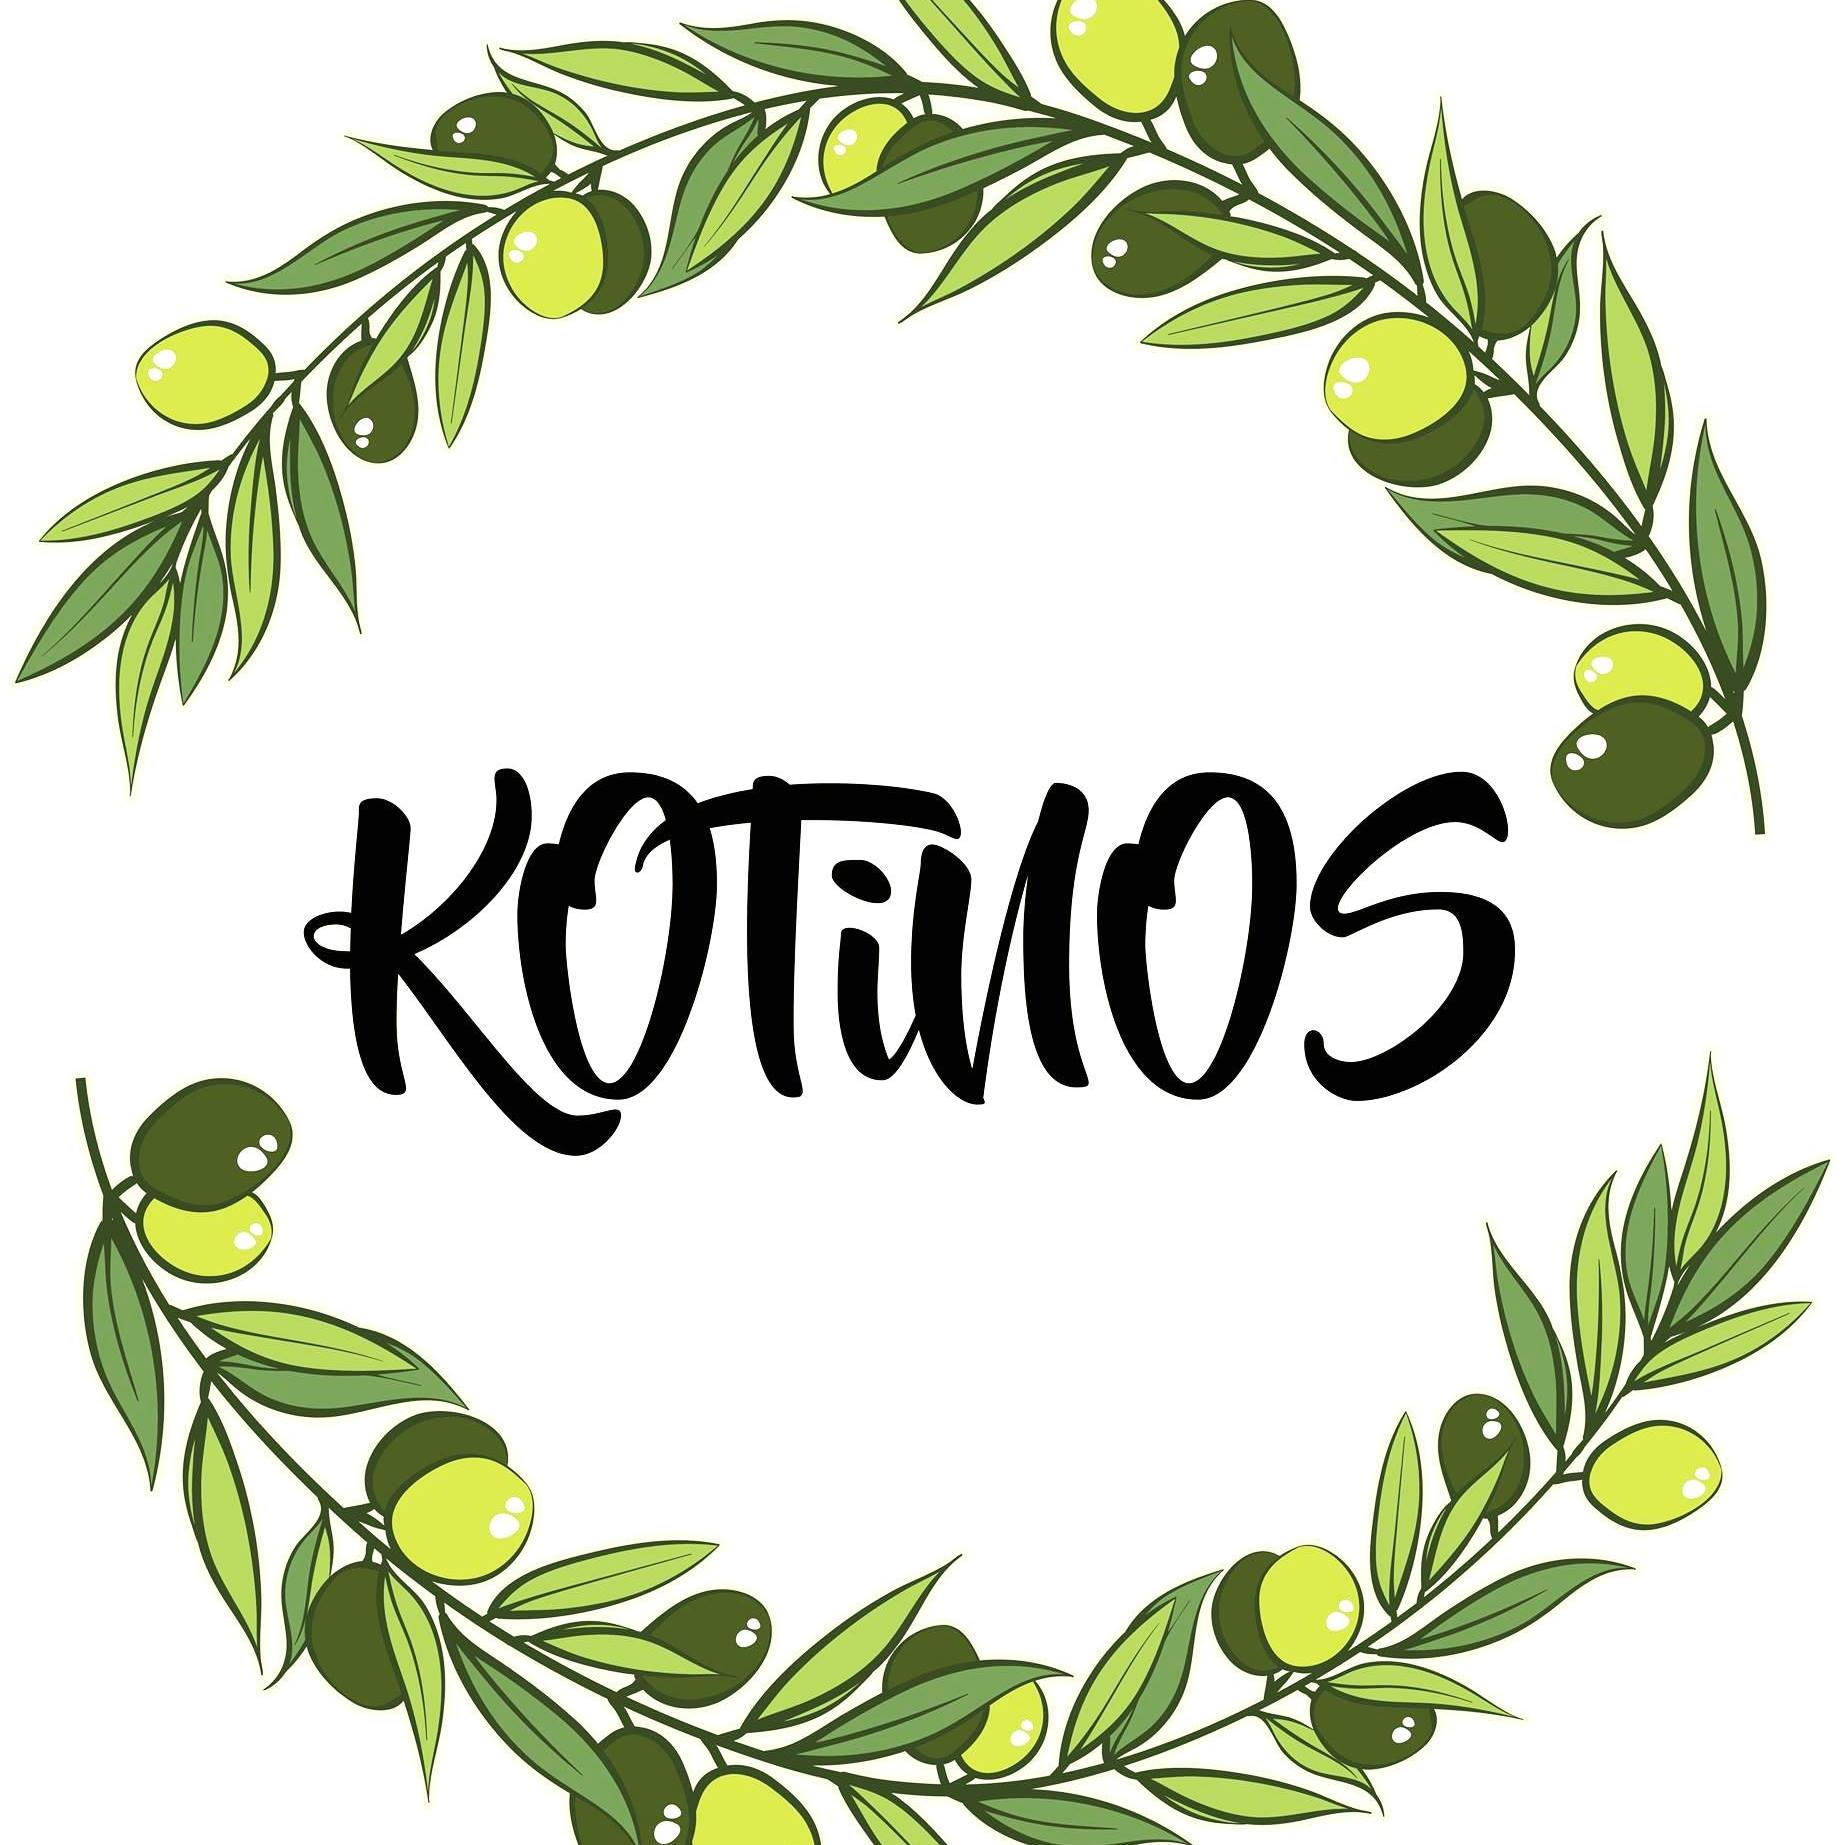 Kotinos logo.